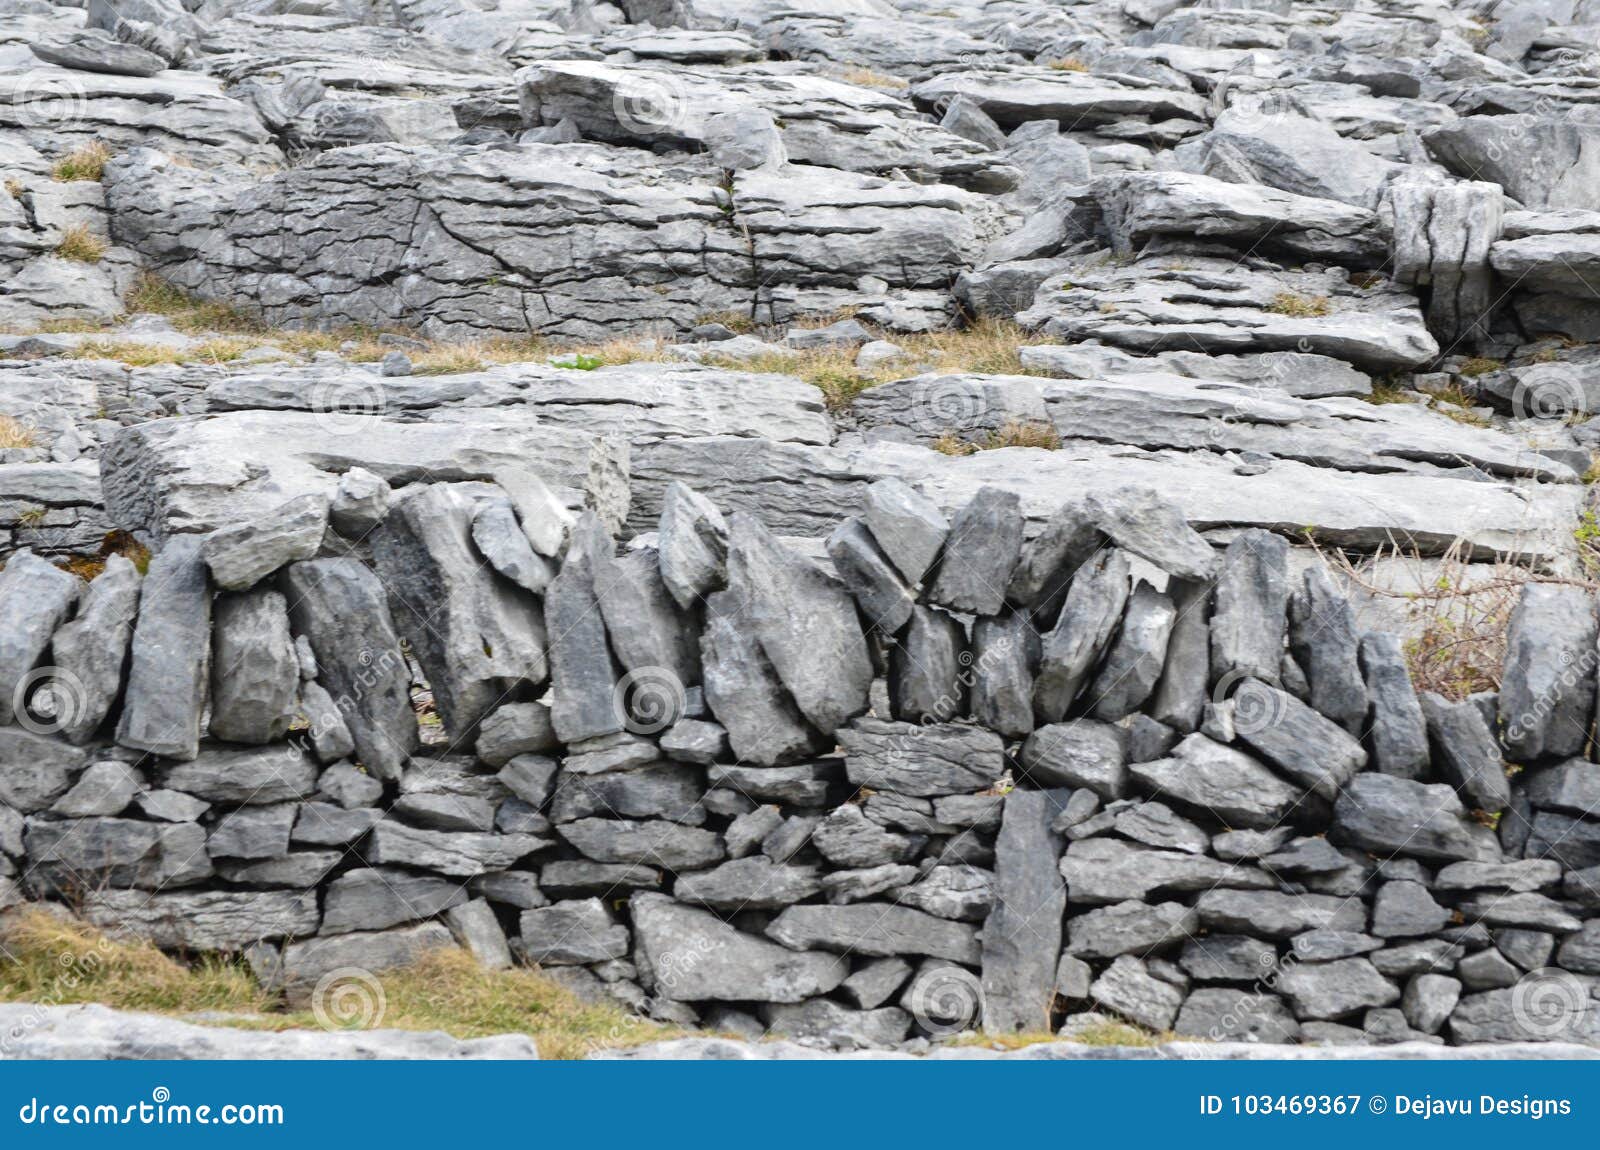 cute rock wall in the burren national park